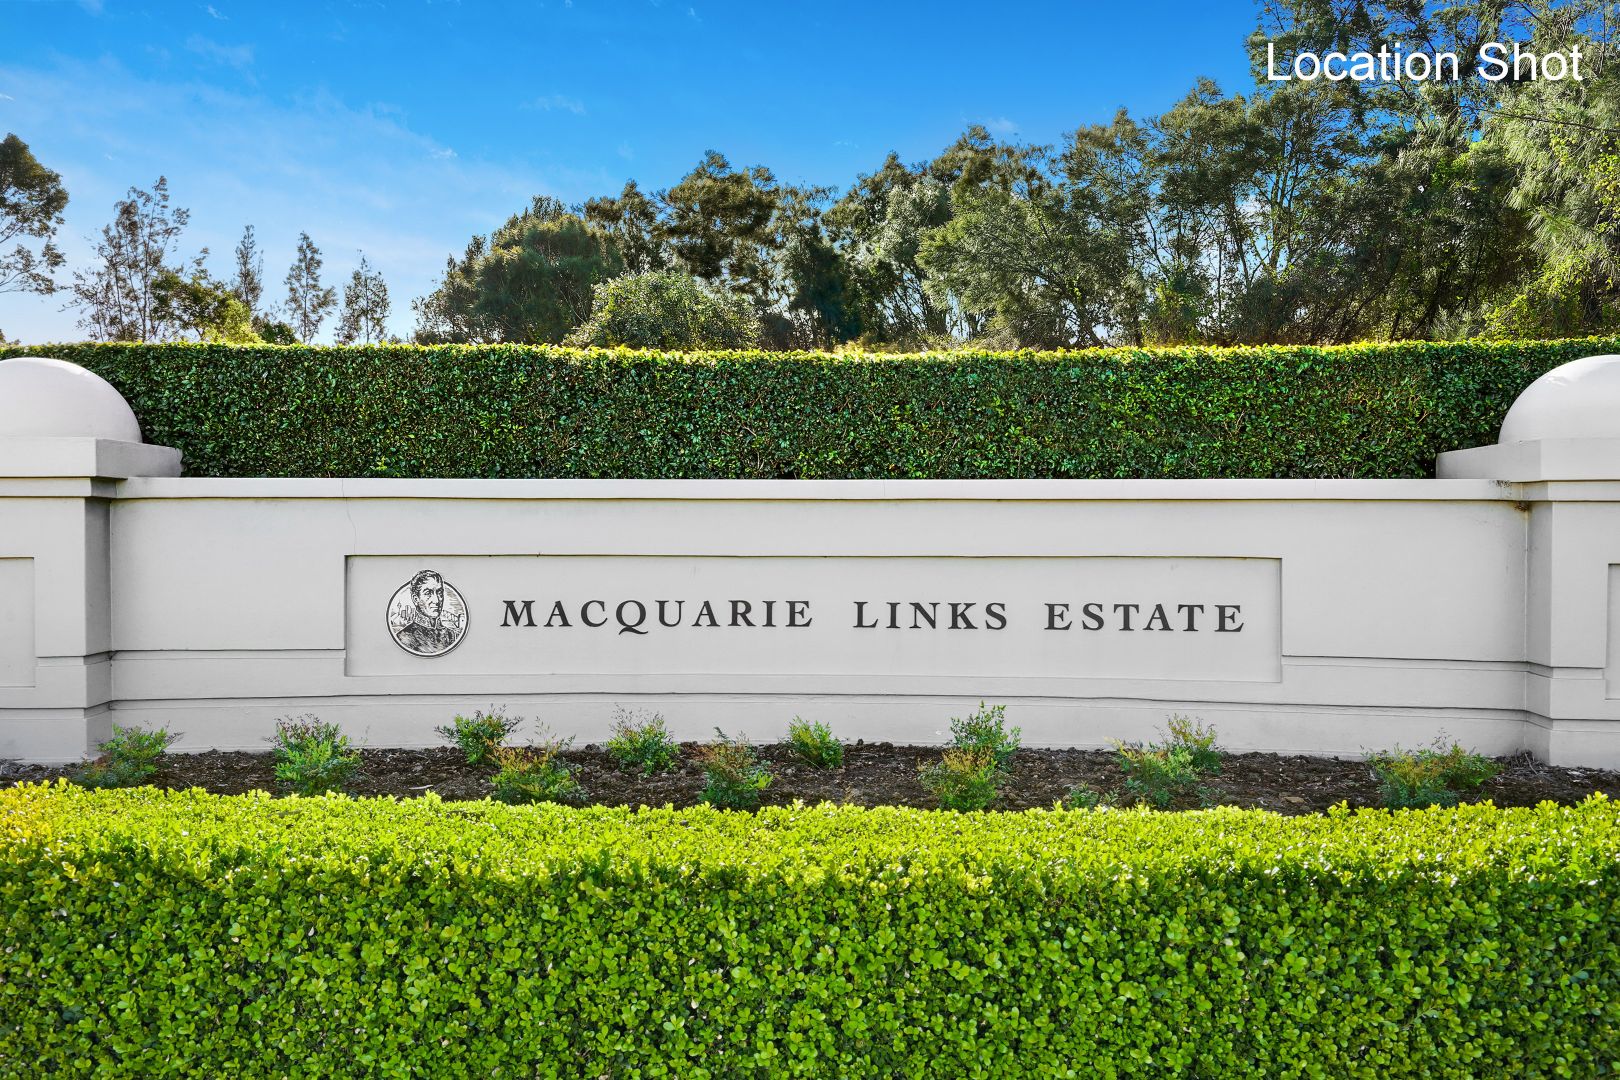 12 Macquarie Links Drive, Macquarie Links NSW 2565, Image 1